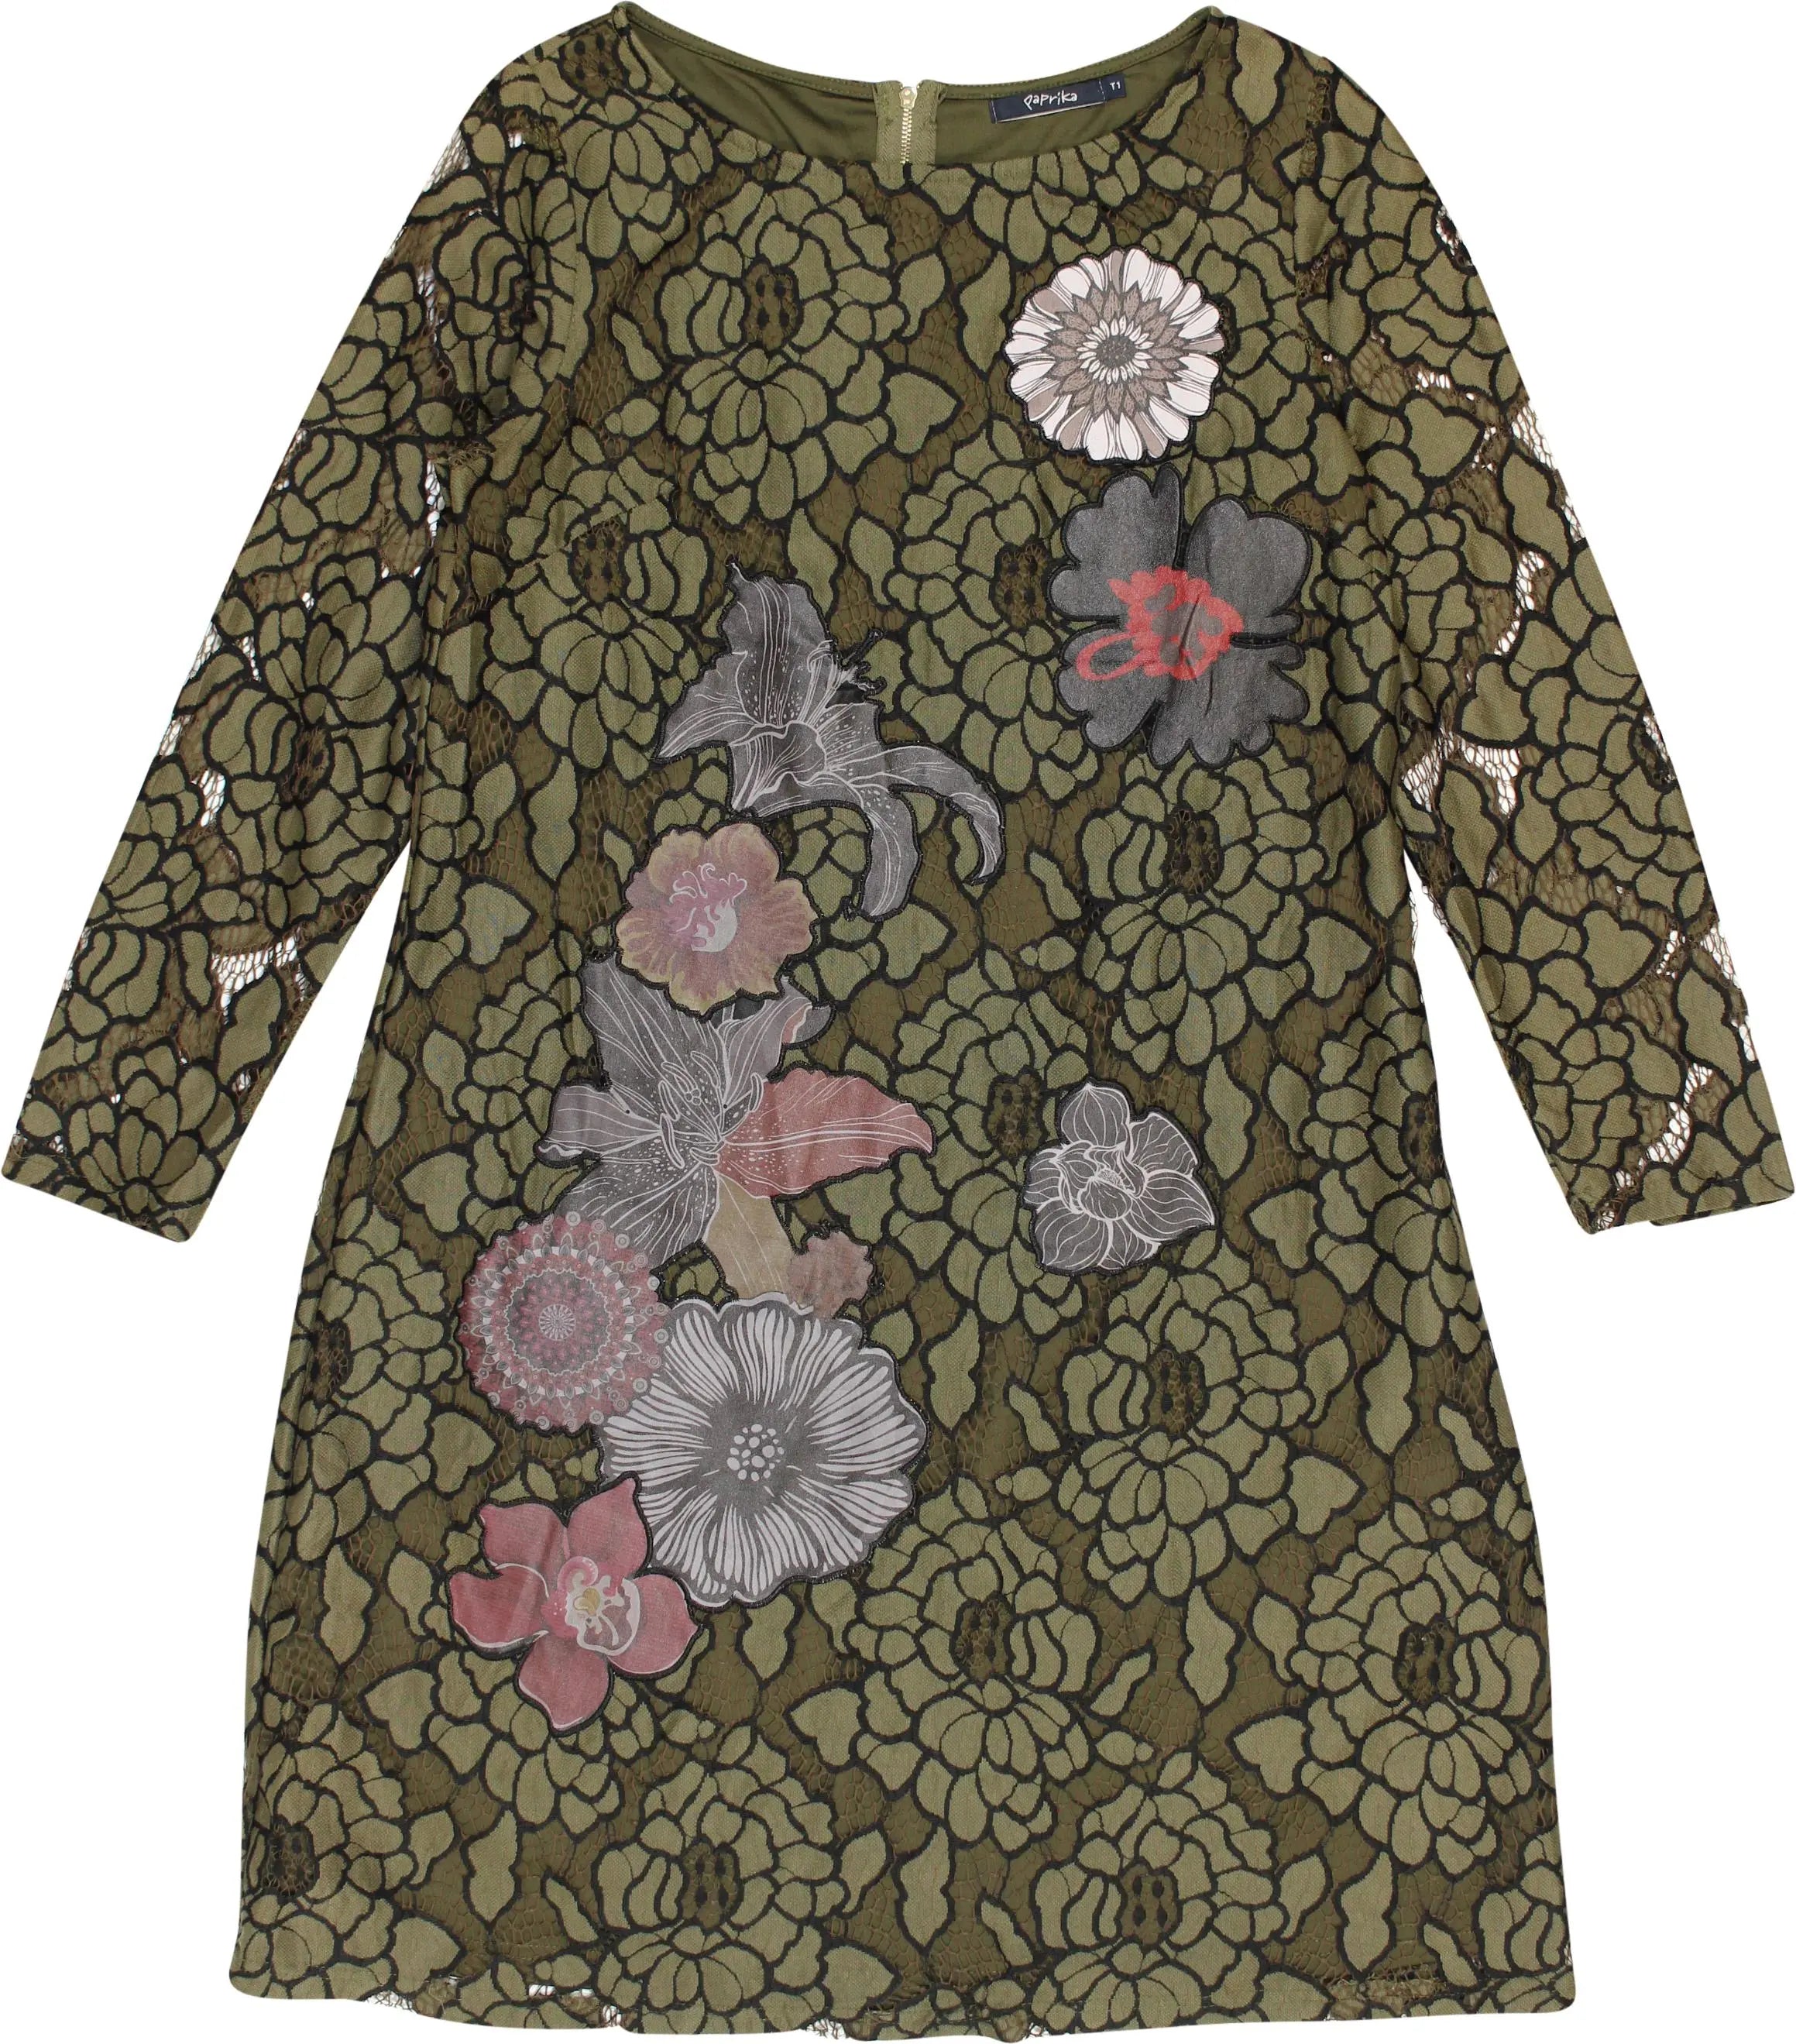 Paprika - Floral Dress- ThriftTale.com - Vintage and second handclothing